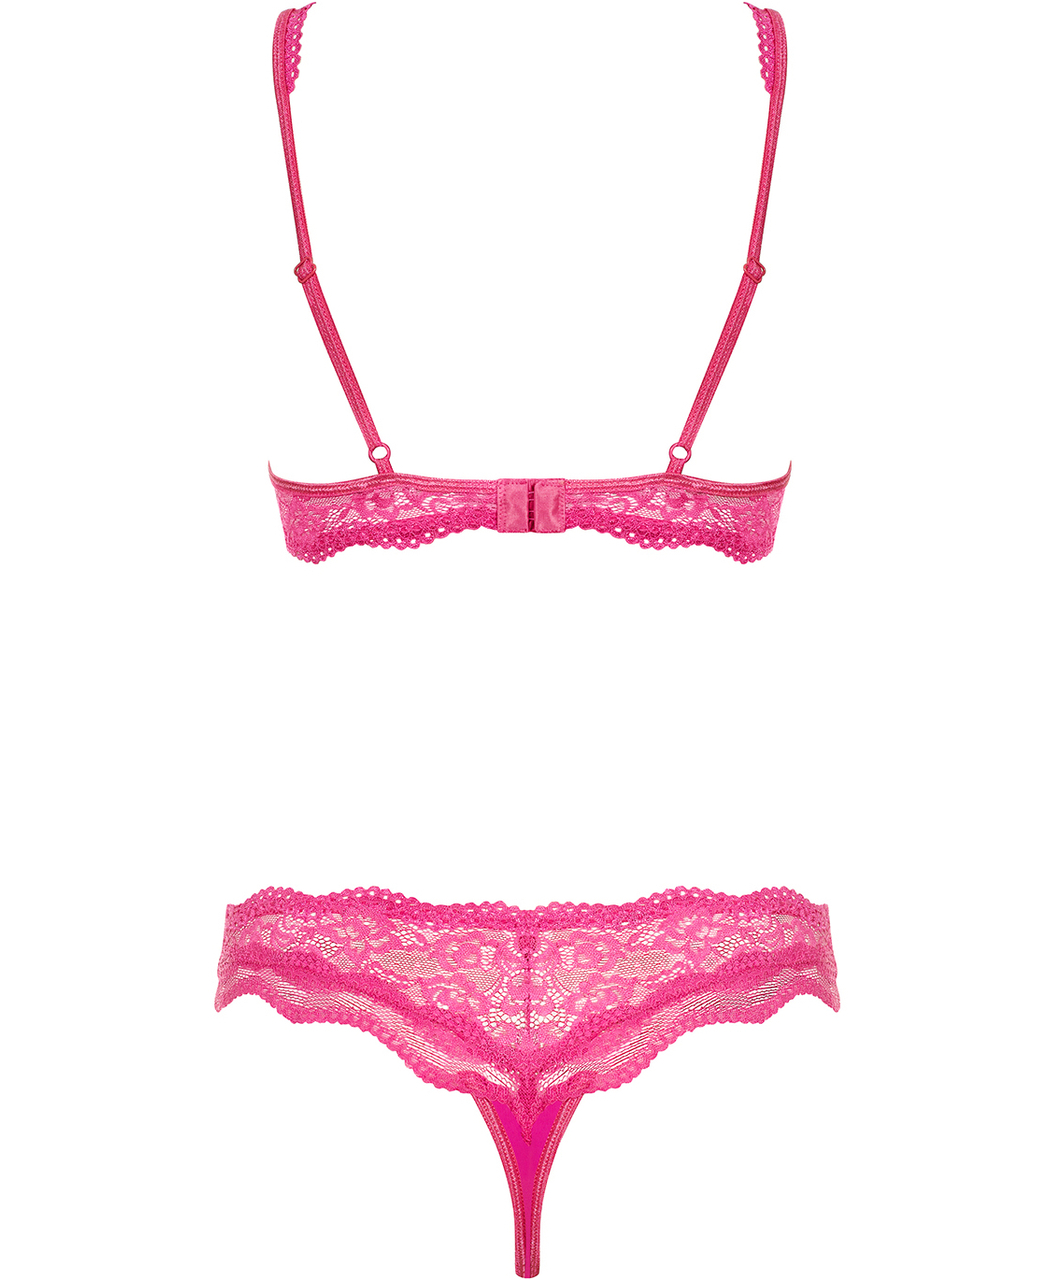 Obsessive Luvae pink lace lingerie set